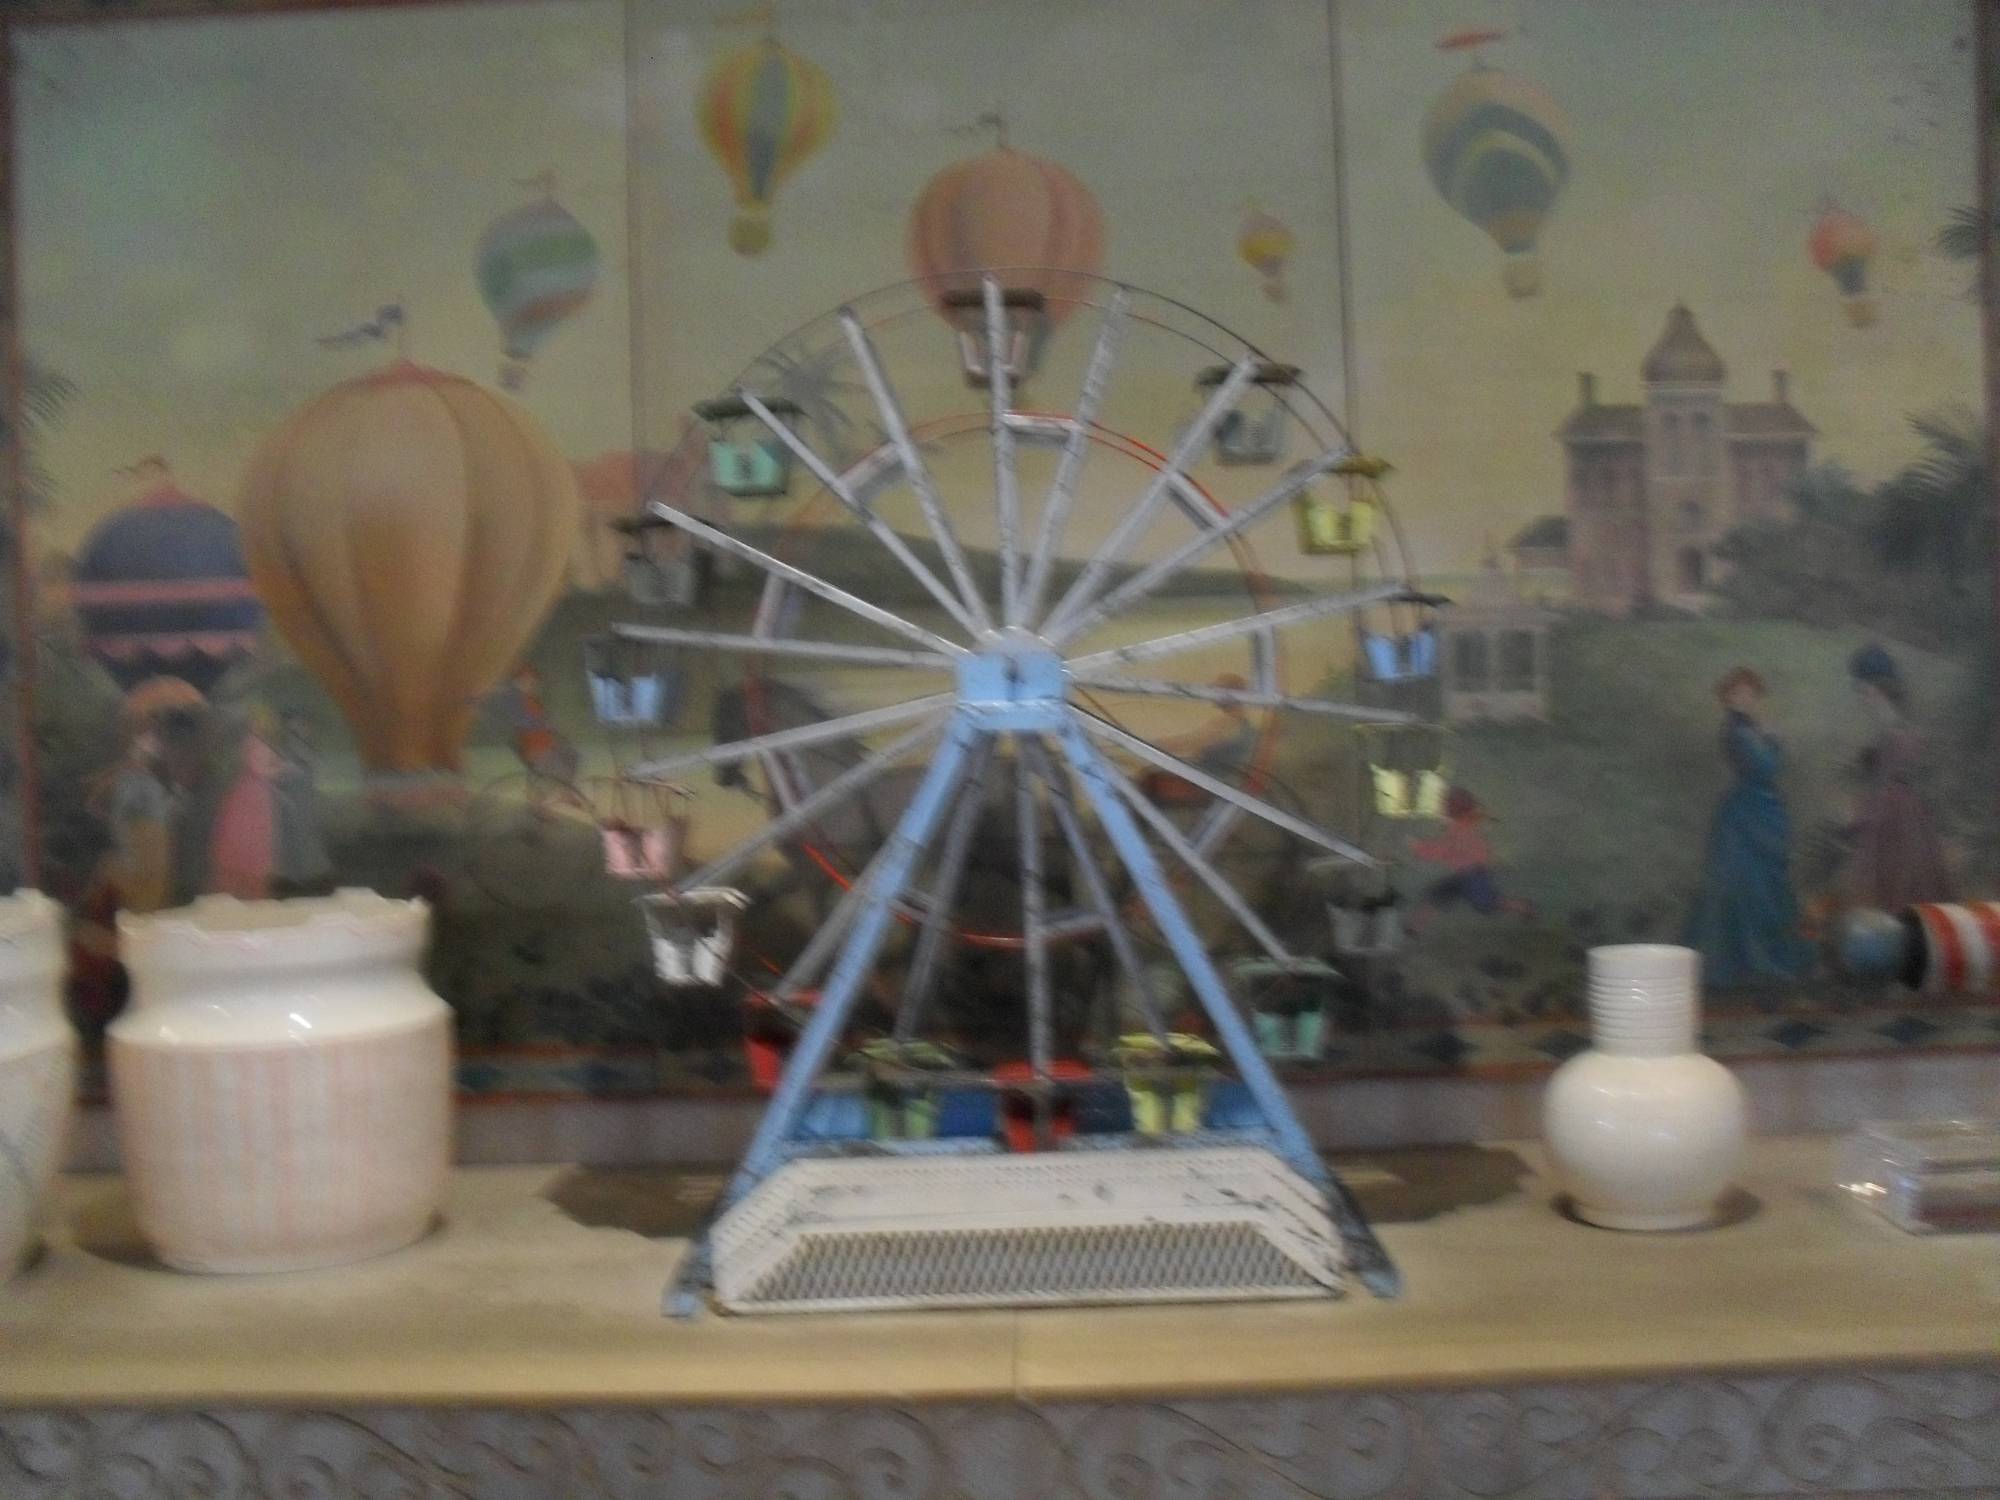 Grand Floridian Ferris Wheel model on 2nd floor